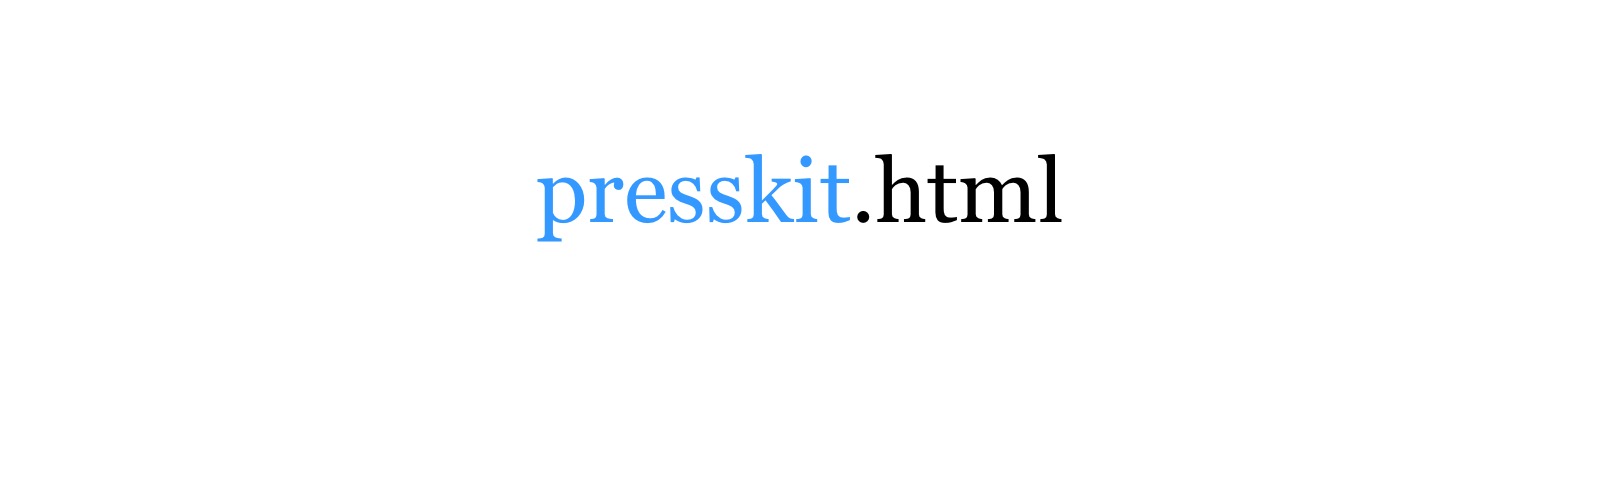 presskit.html